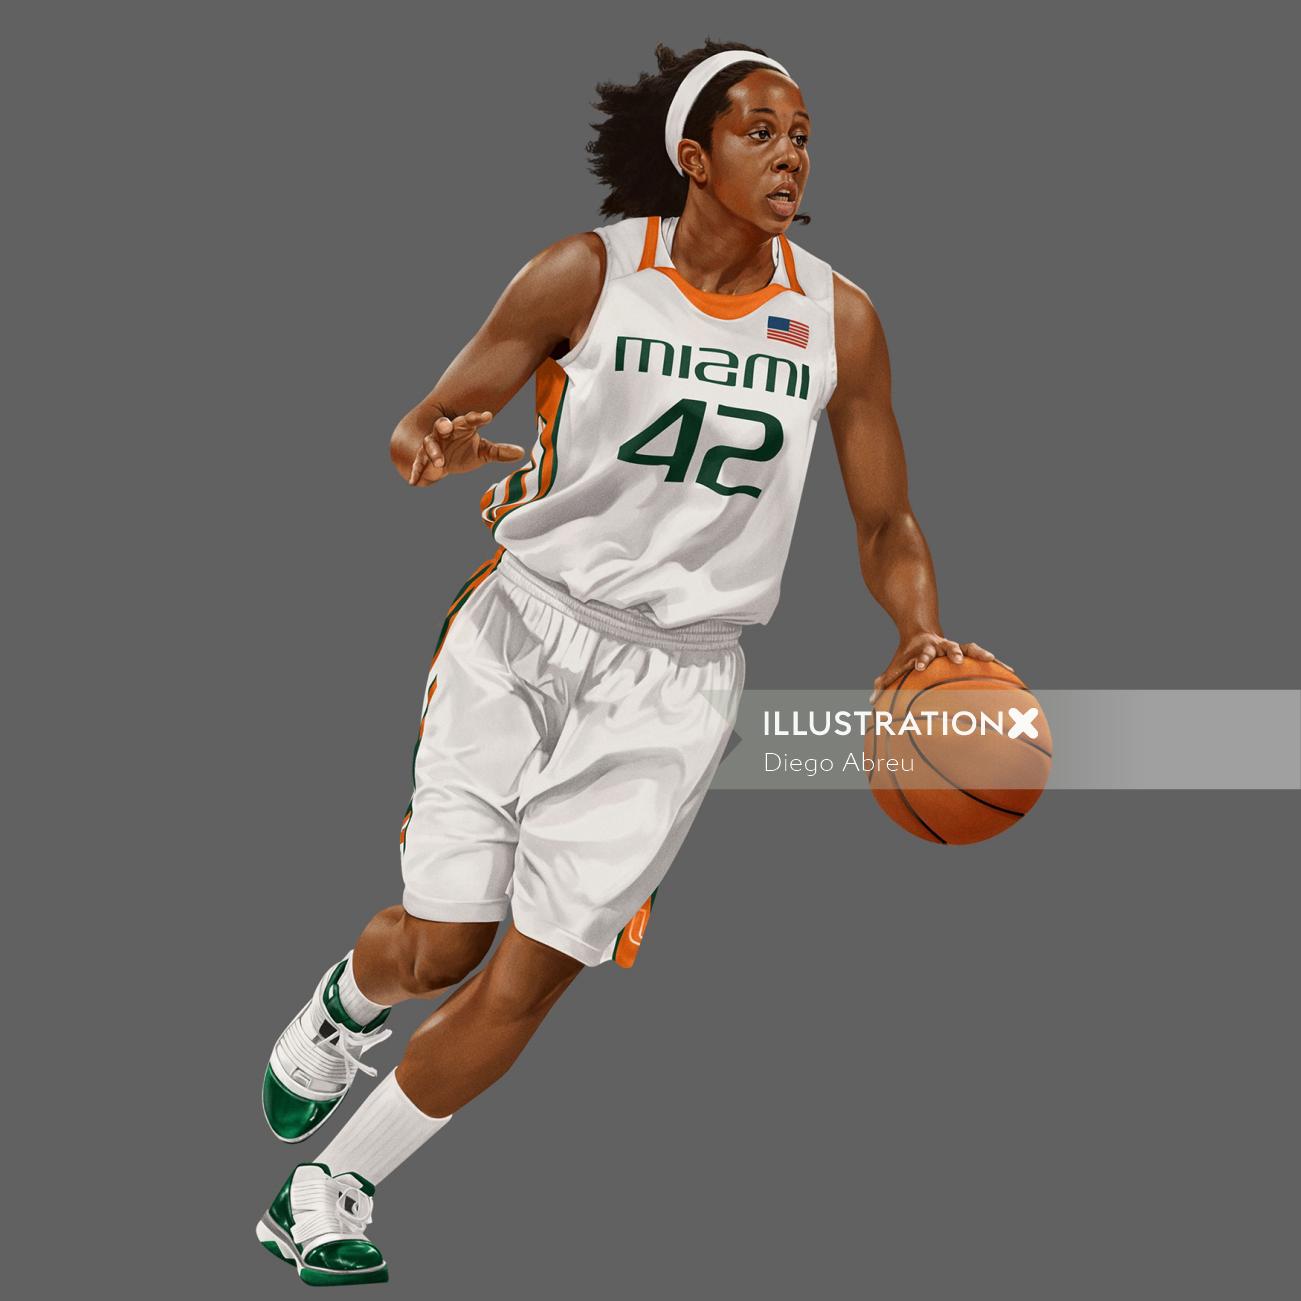 Digital imagery of woman basketballer